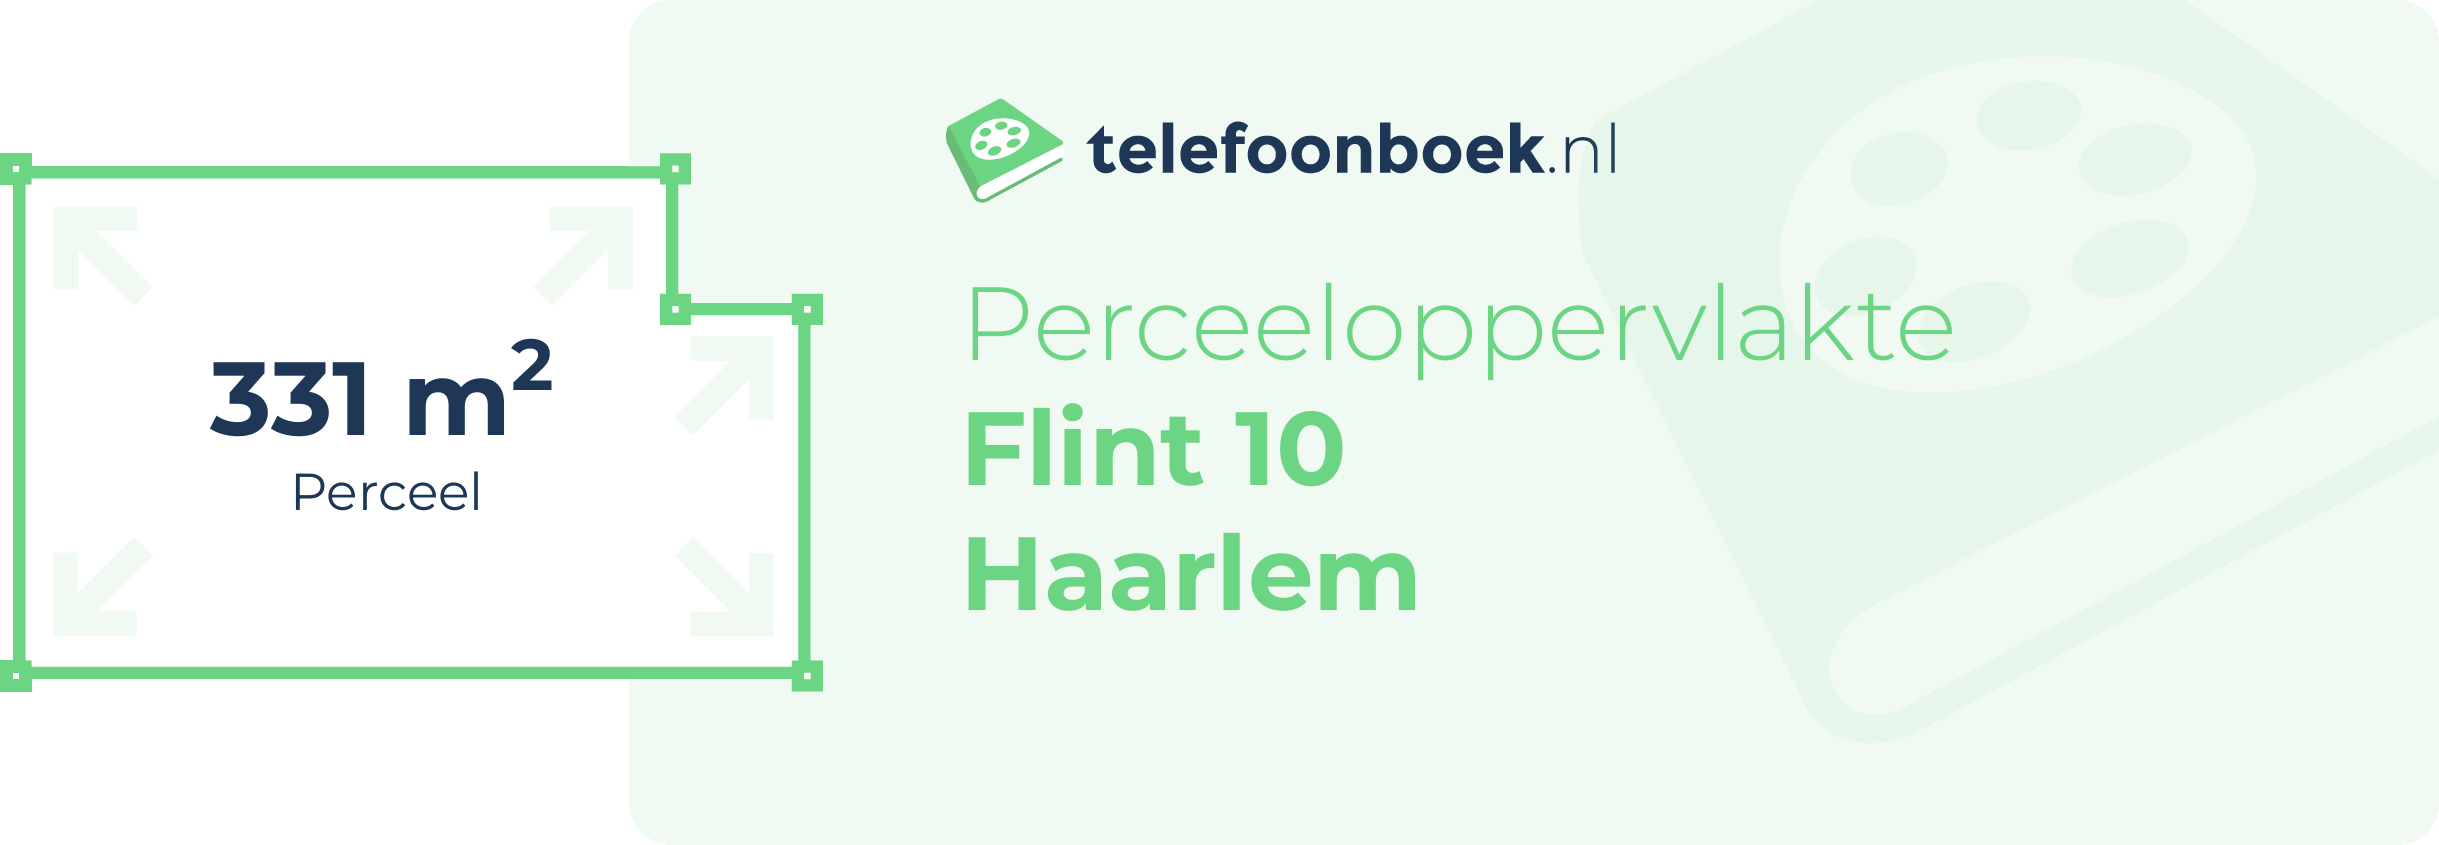 Perceeloppervlakte Flint 10 Haarlem